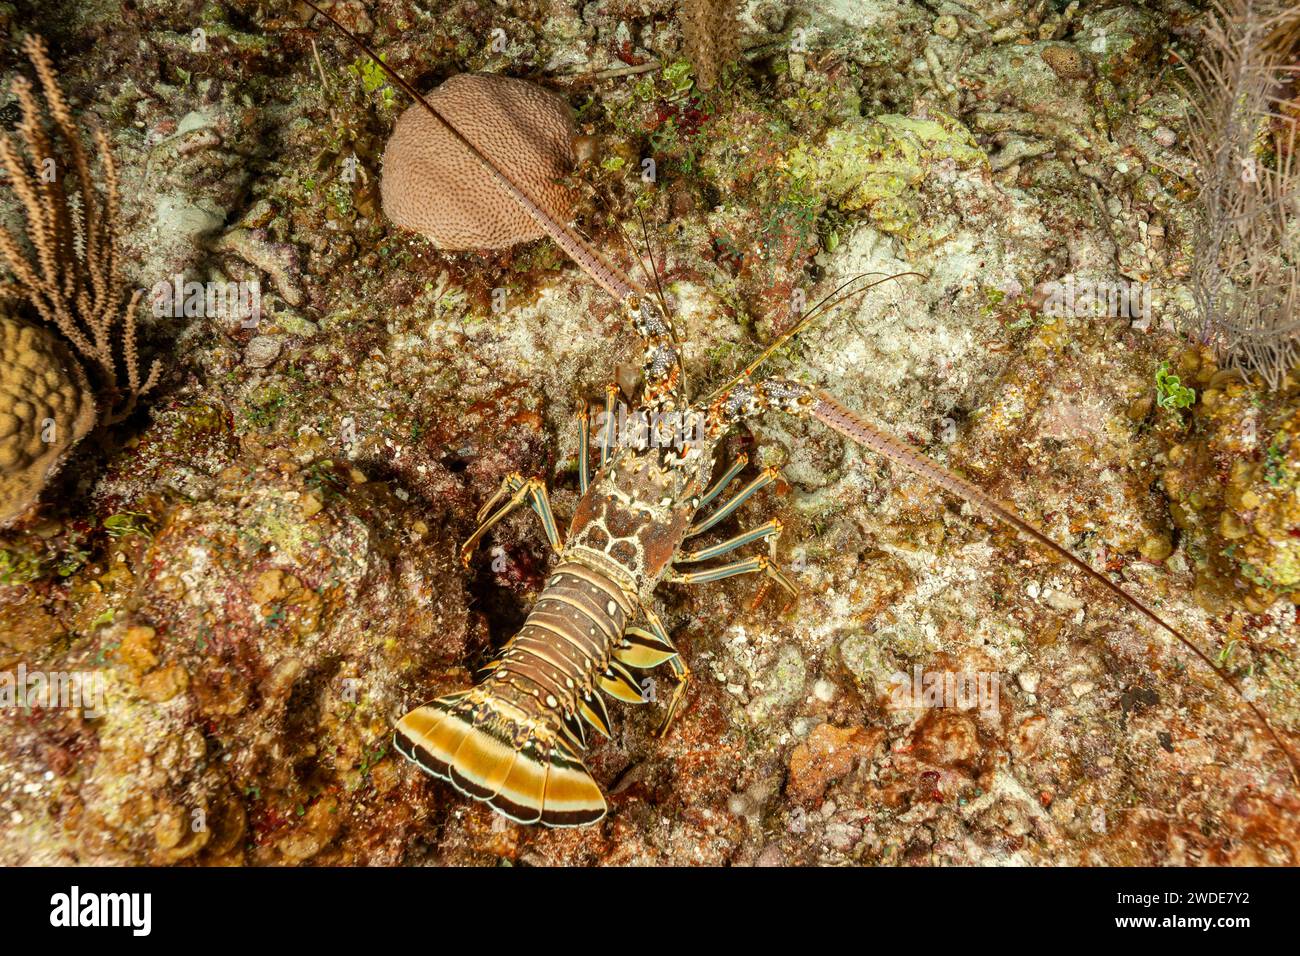 Belize, Caribbean Spiny Lobster (Panulirus argus) Stock Photo